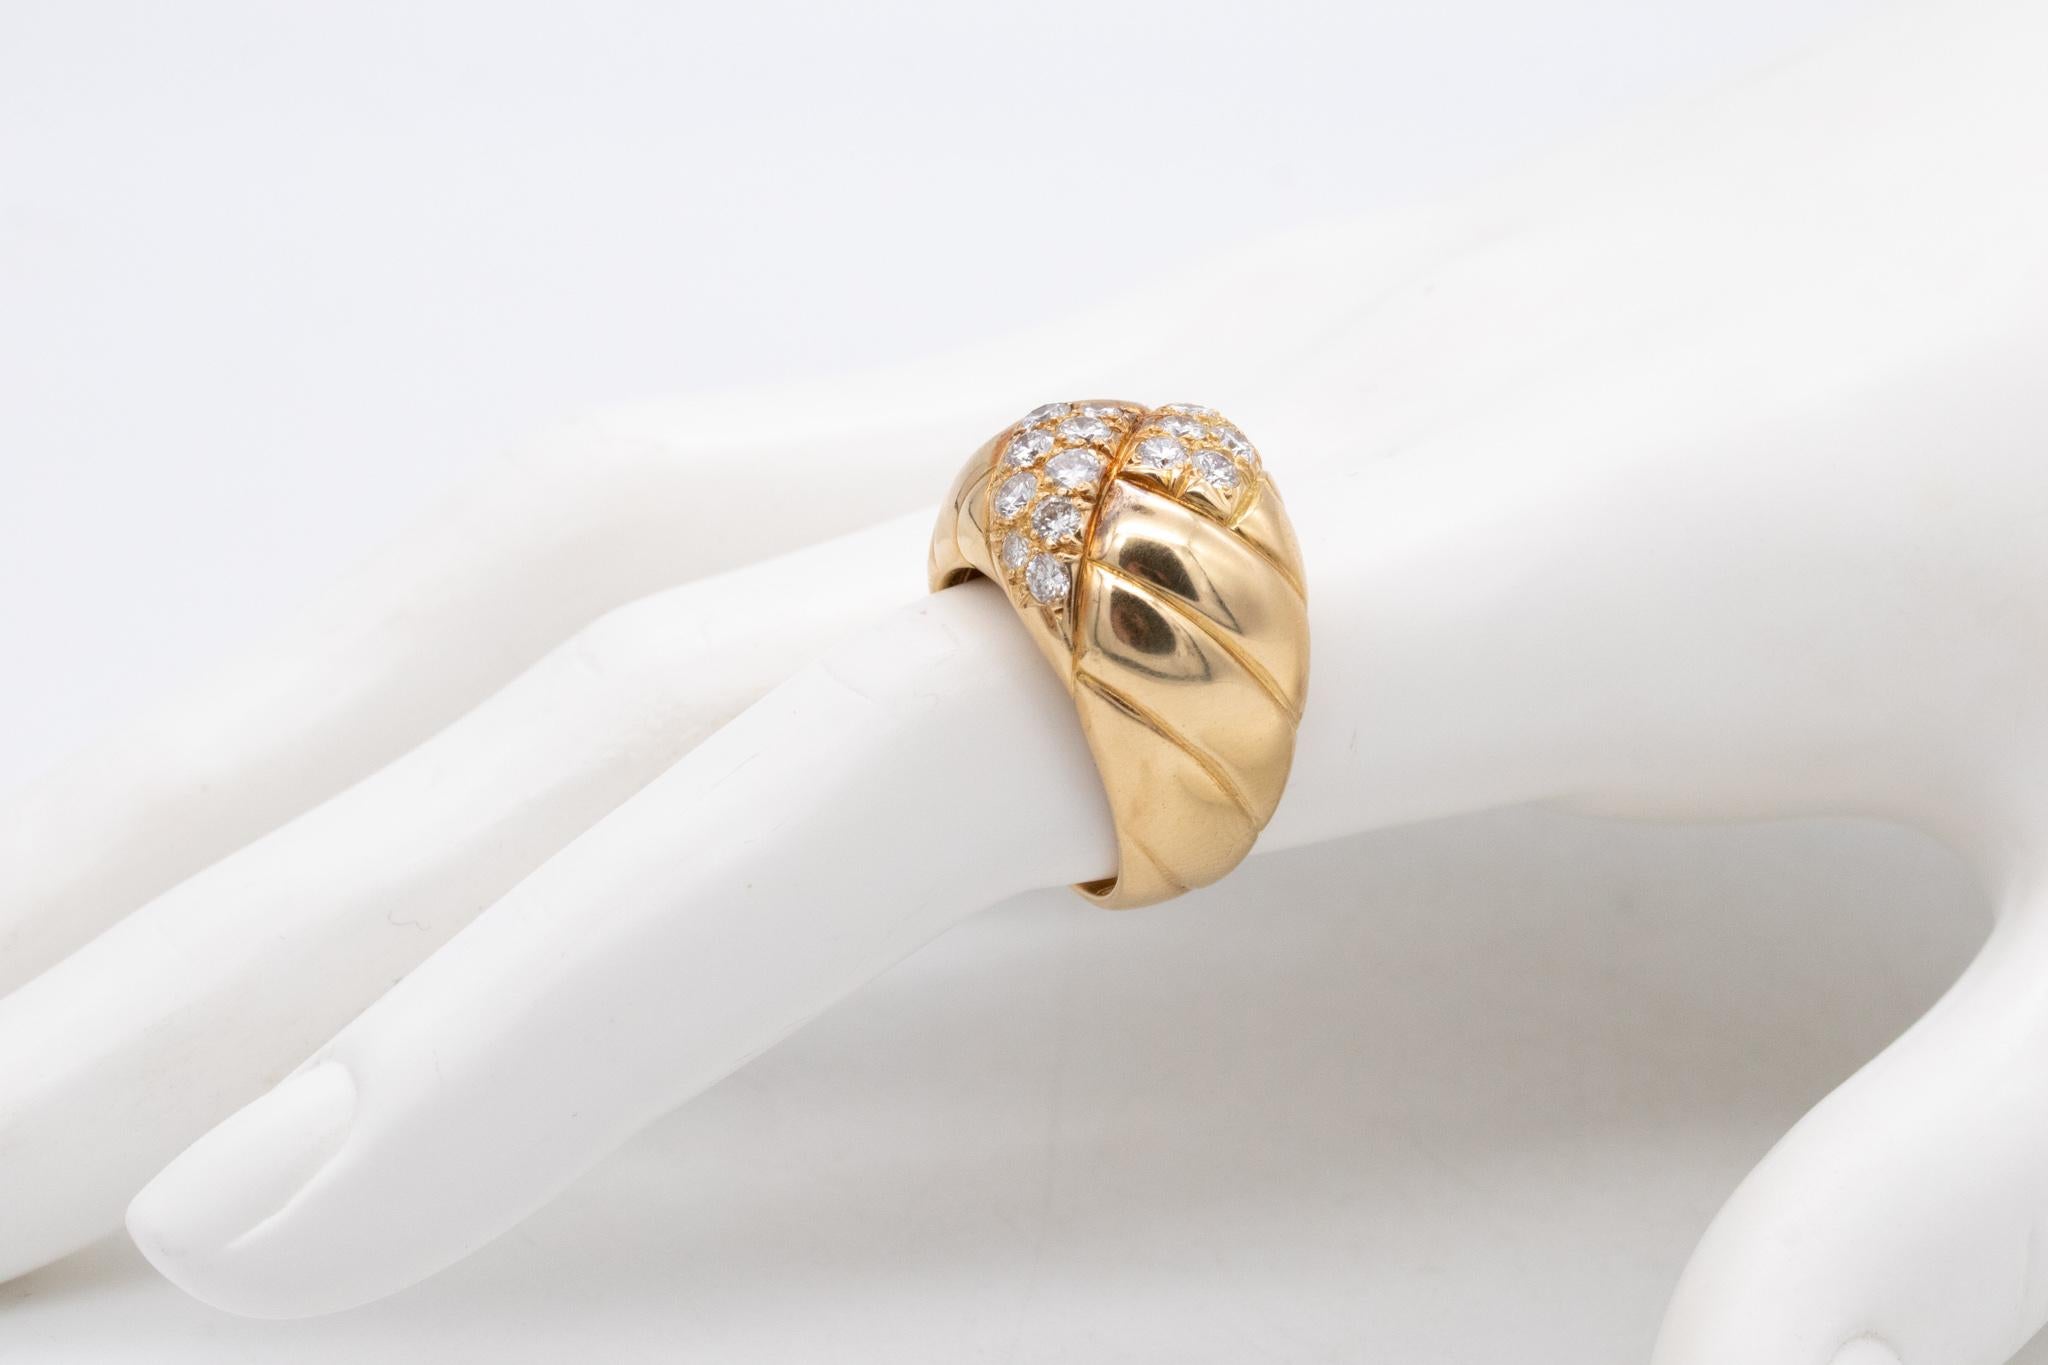 Modernist Van Cleef Arpels 1970 Paris Bombe Cocktail Ring 18Kt Gold 1.26 Cts VVS Diamonds For Sale